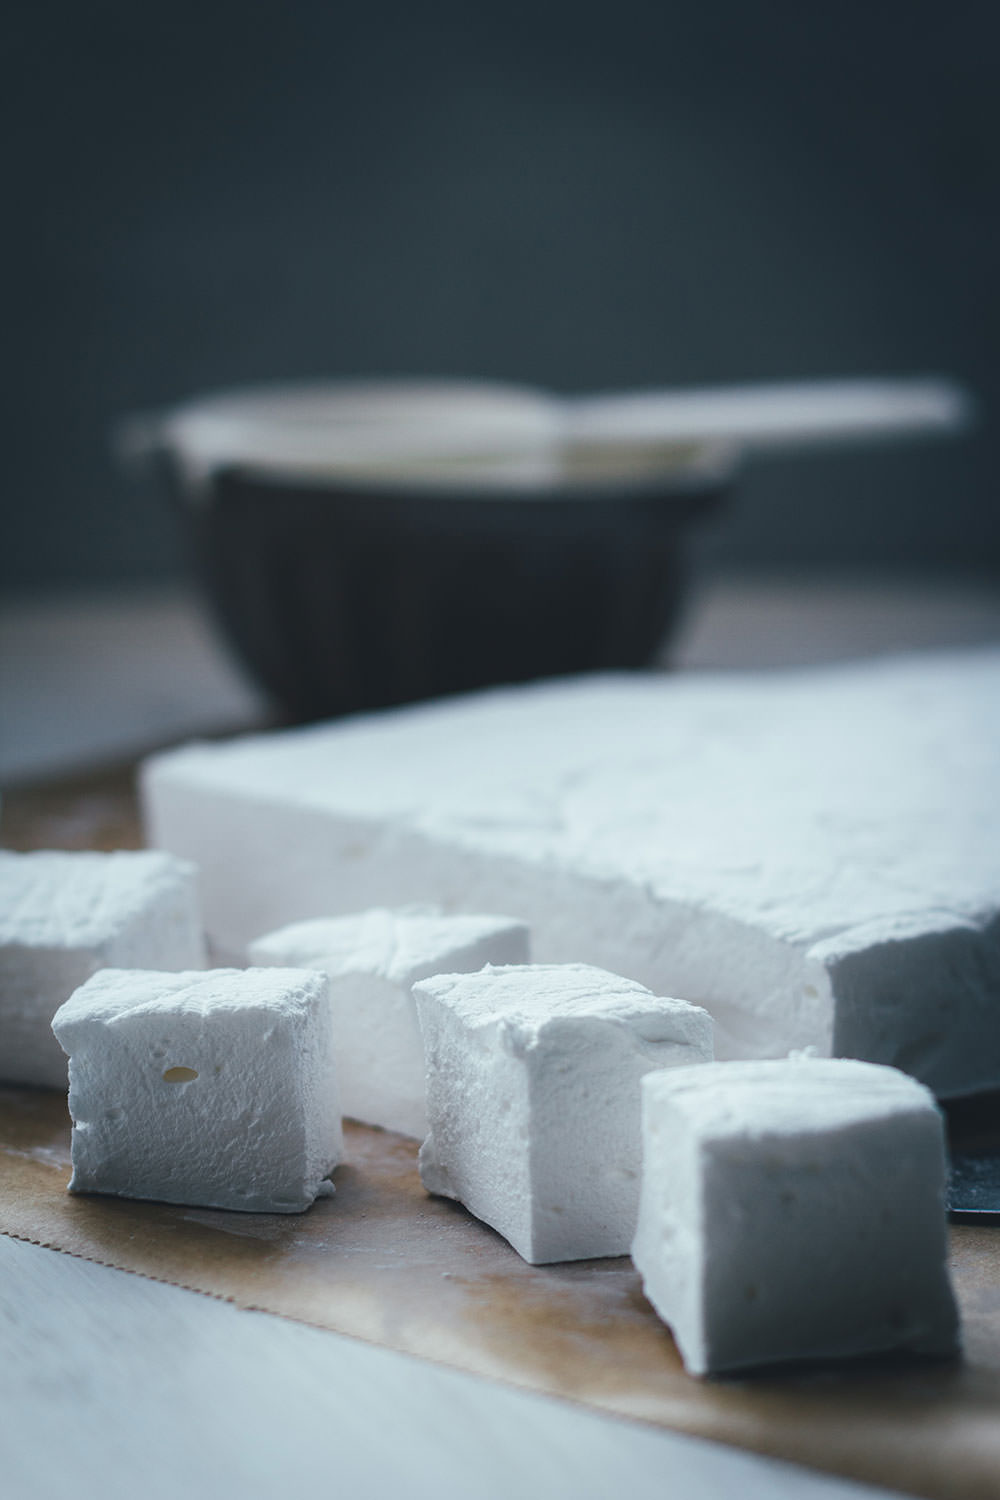 Rezept für selbst gemachte Marshmallows | DIY Mäusespeck | moeyskitchen.com #marshmallows #mäusespeck #diy #selbstgemacht #homemade #grundrezept #foodblogger #rezepte